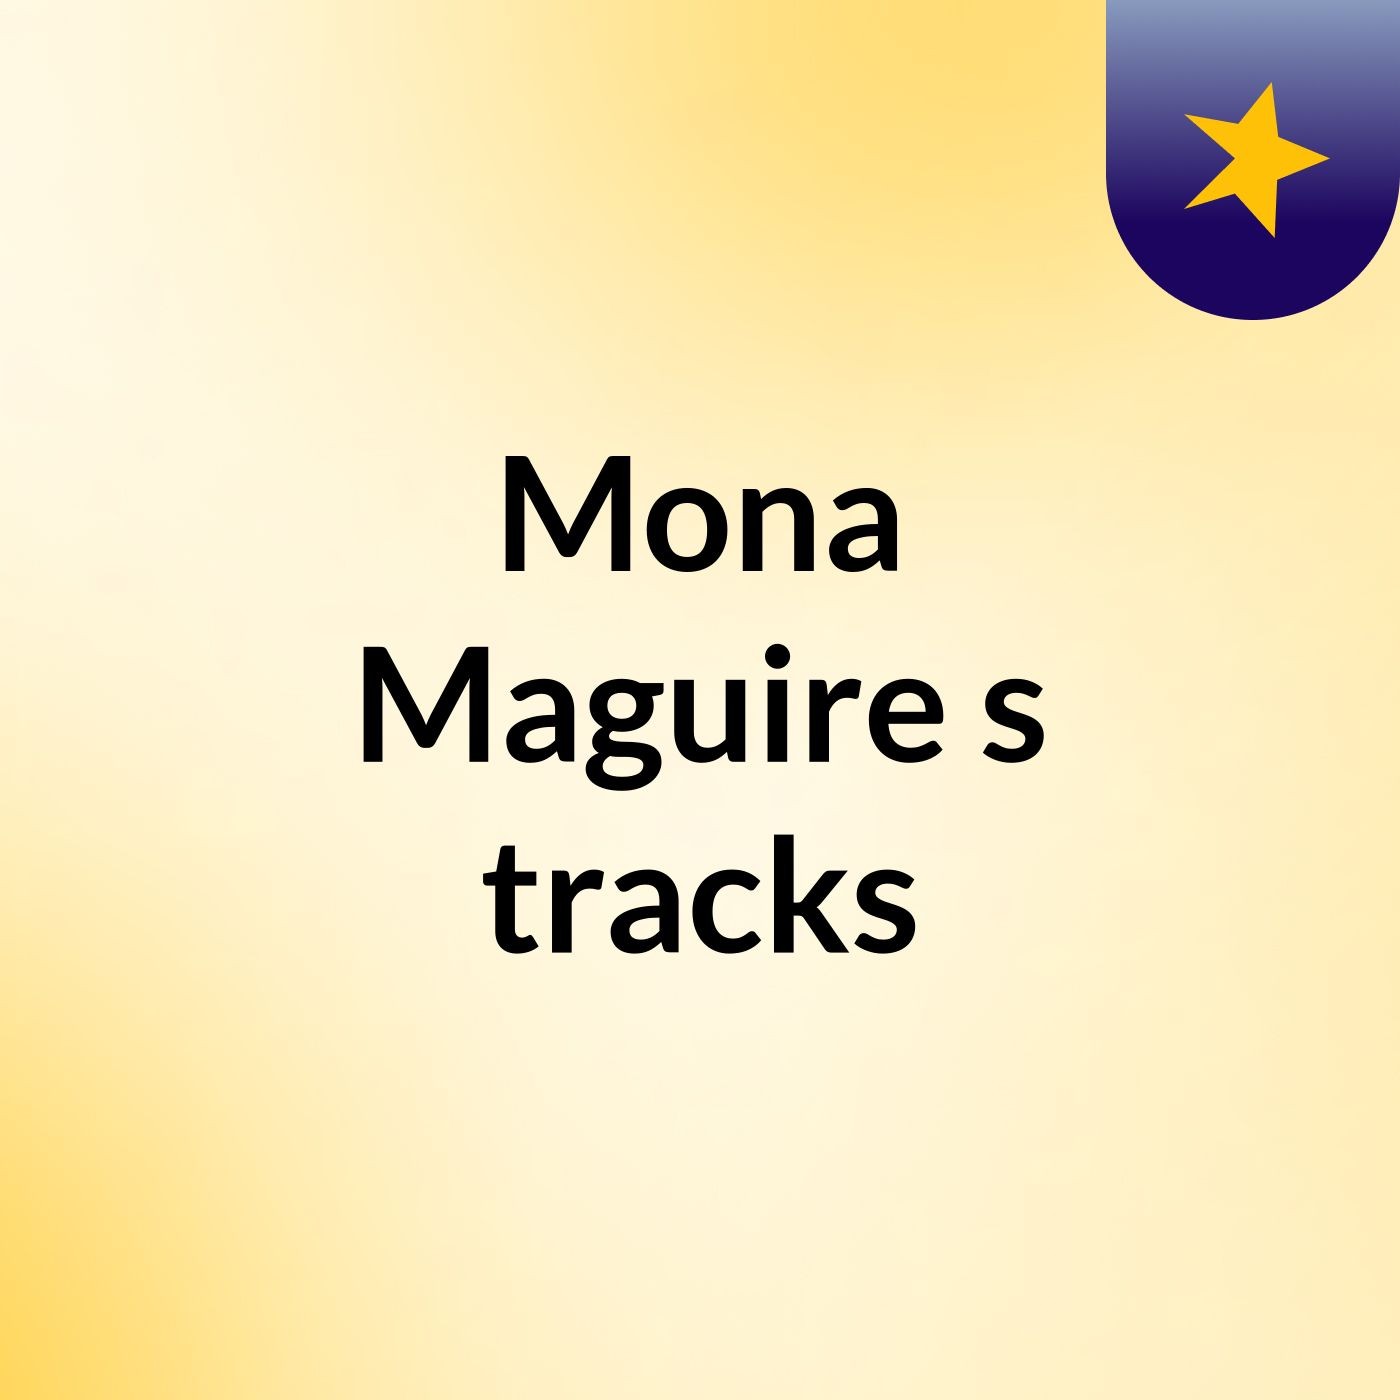 Mona Maguire's tracks